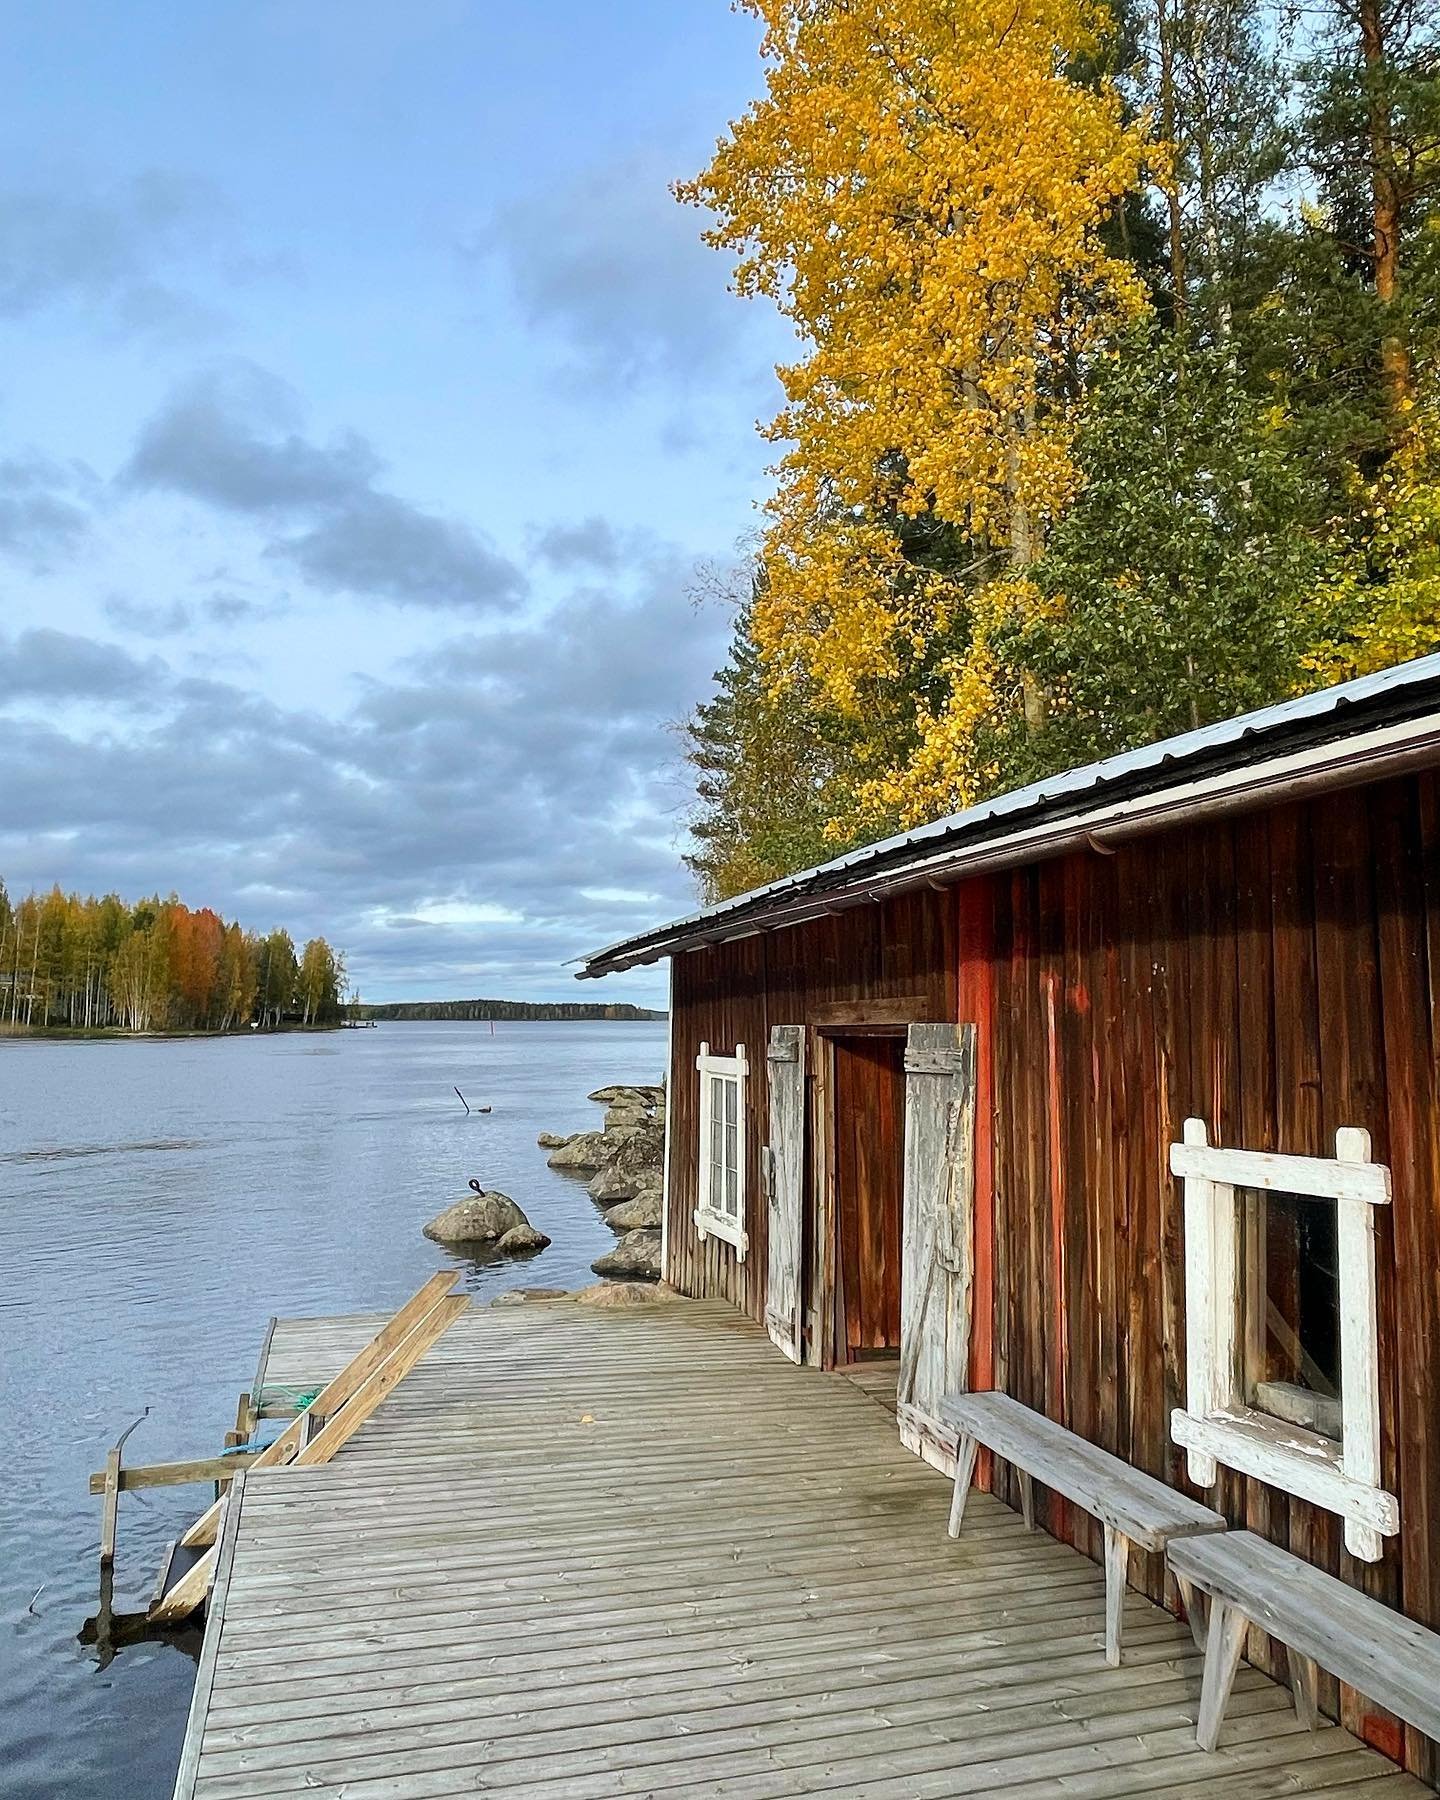 The oldest sauna in Central Finland was glorious last weekend. 🍂🔥🙏🏼
.
.
.
.
.
#sauna #finland #nature #beauty #ritual #forest #view #old #historic #legendary #finnish #saunatime #saunalife #healthy #calming #golden #autumn #colours #kiitos #ihana